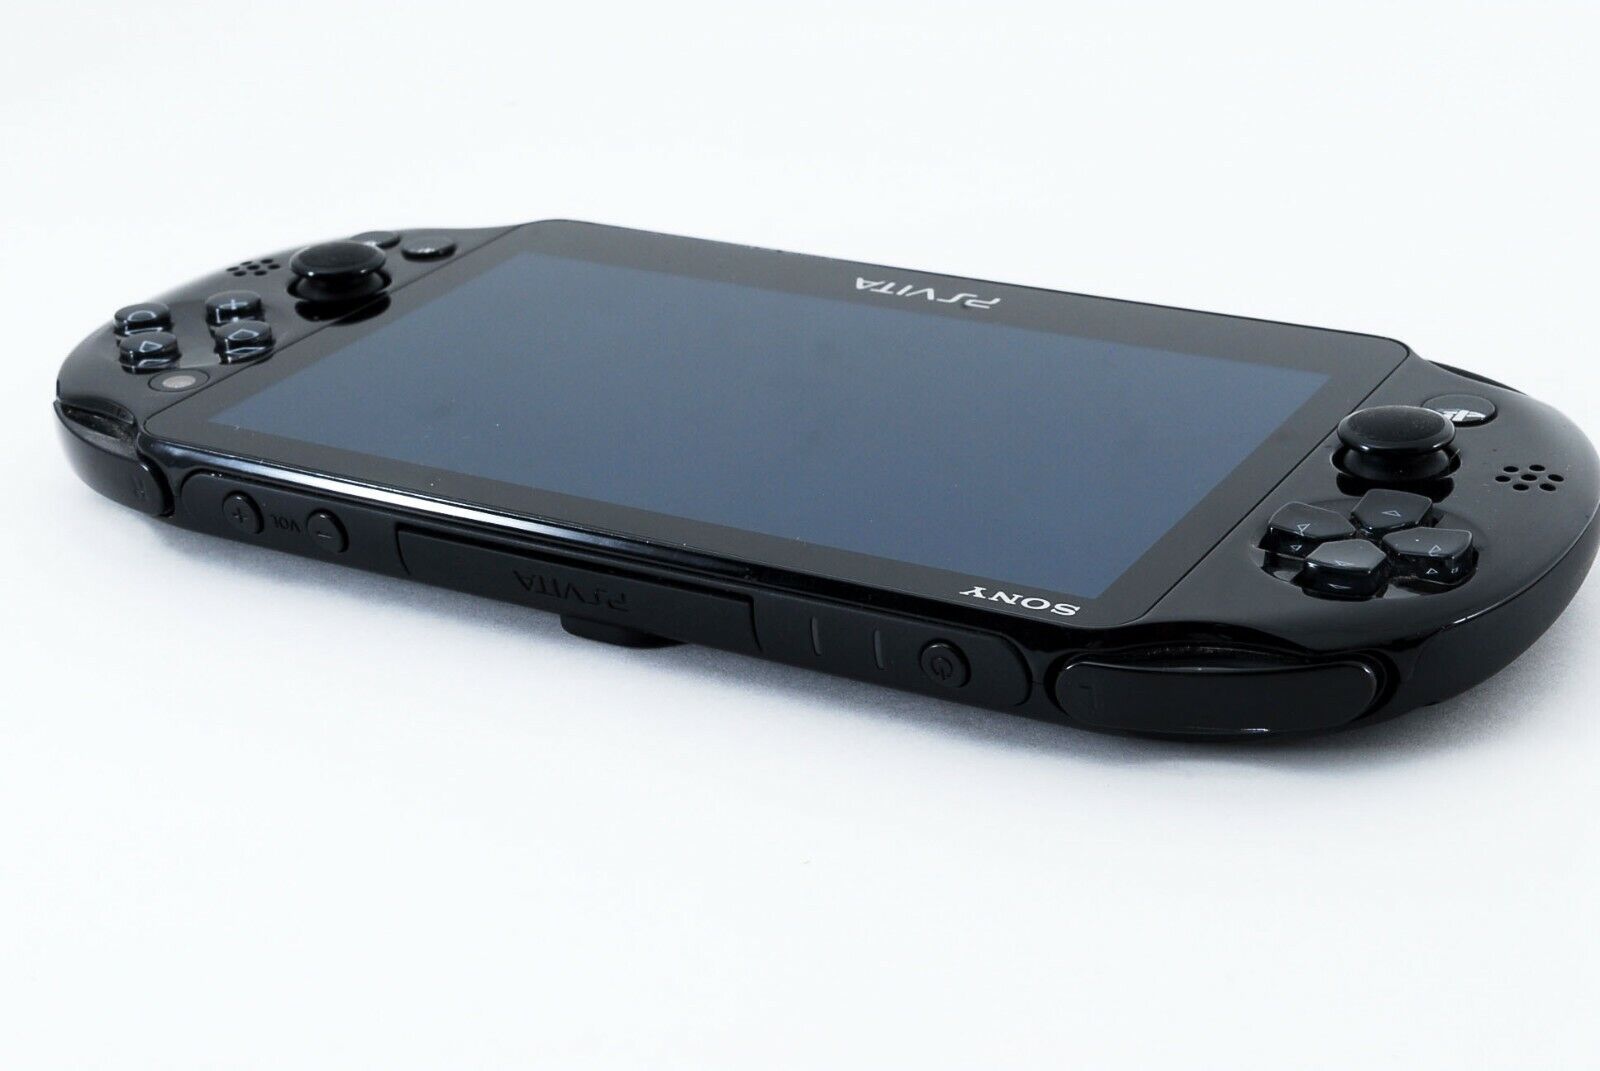 Sony PS Vita Black Slim Playstation PCH-2000 w/ Charger 